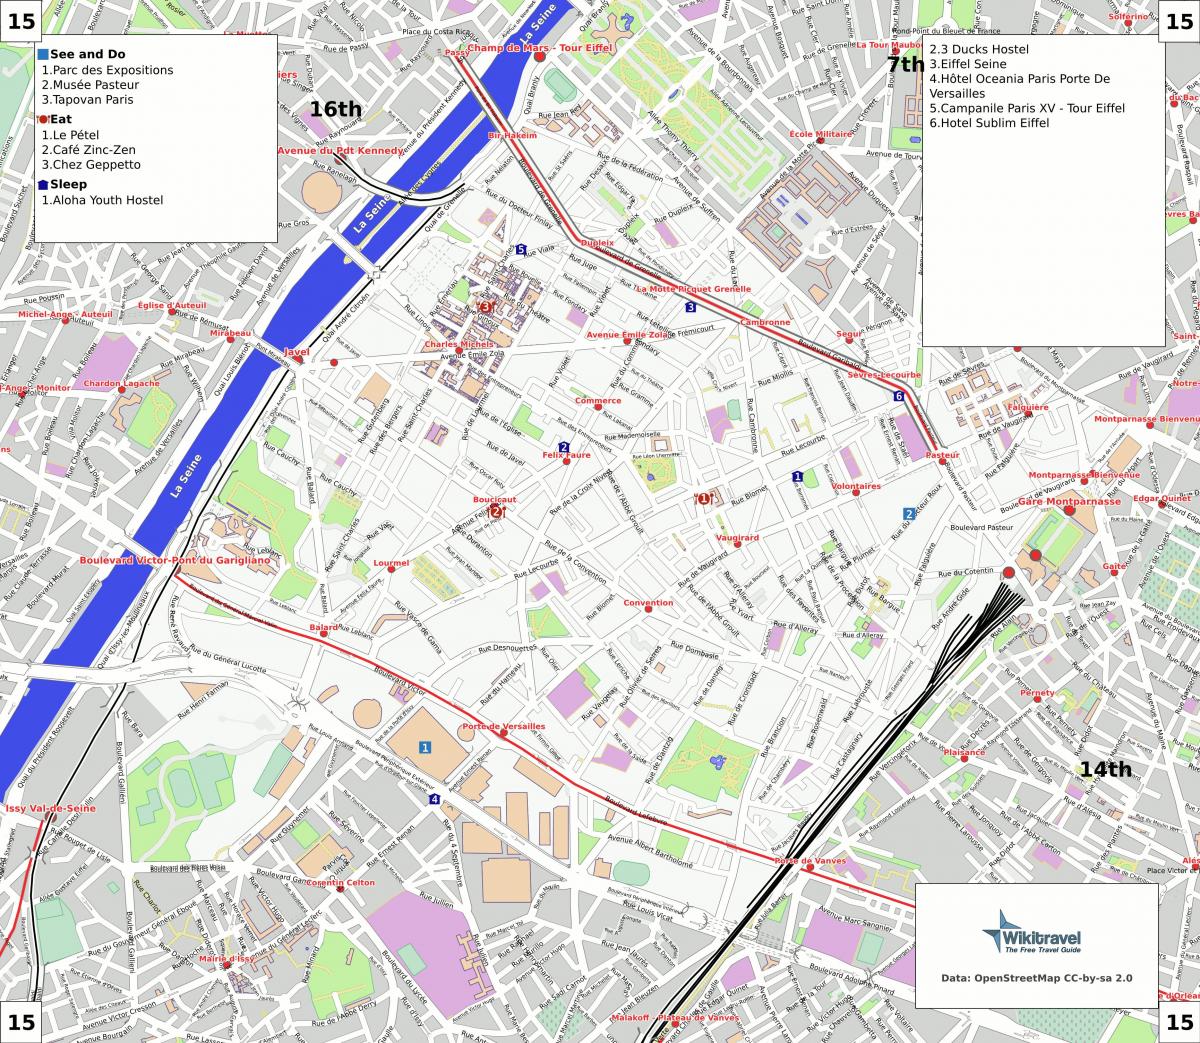 Peta ke-15 arrondissement Paris